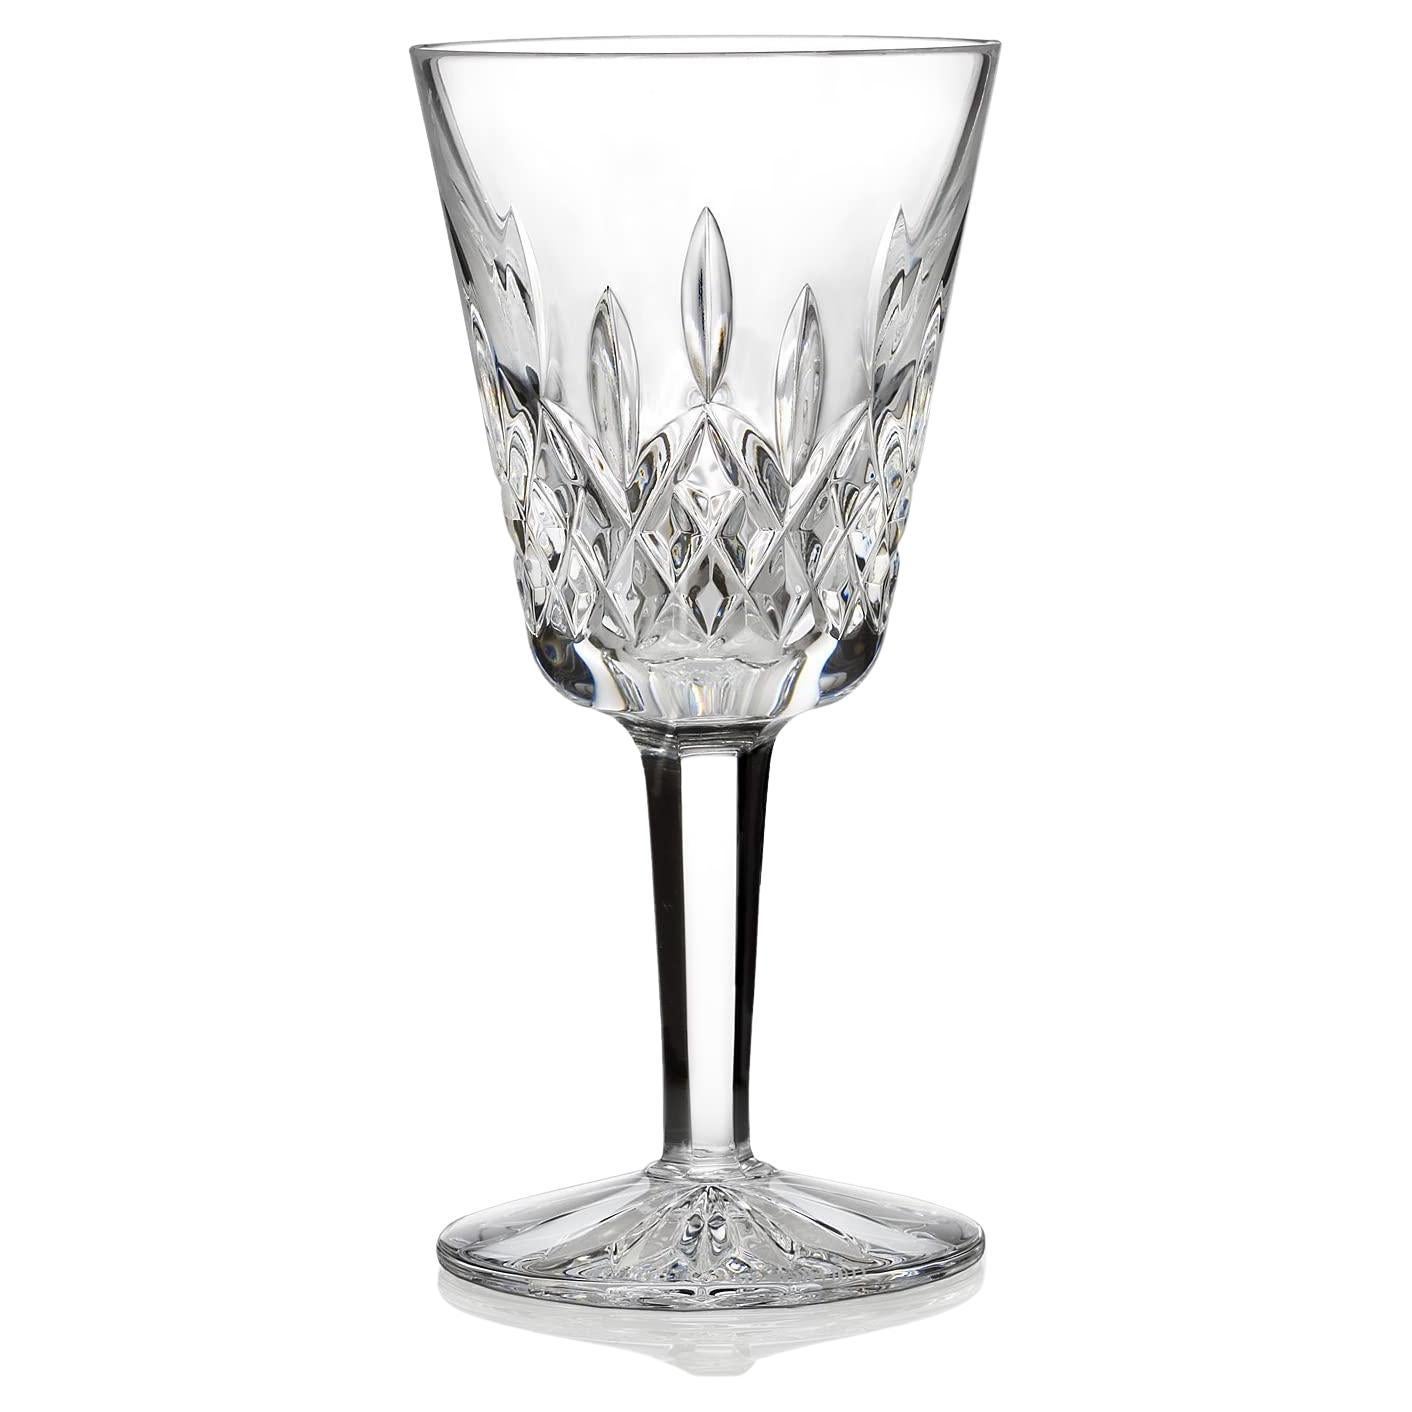 Vintage Waterford Lismore Crystal Wine Glass, Germany, circa 1990s